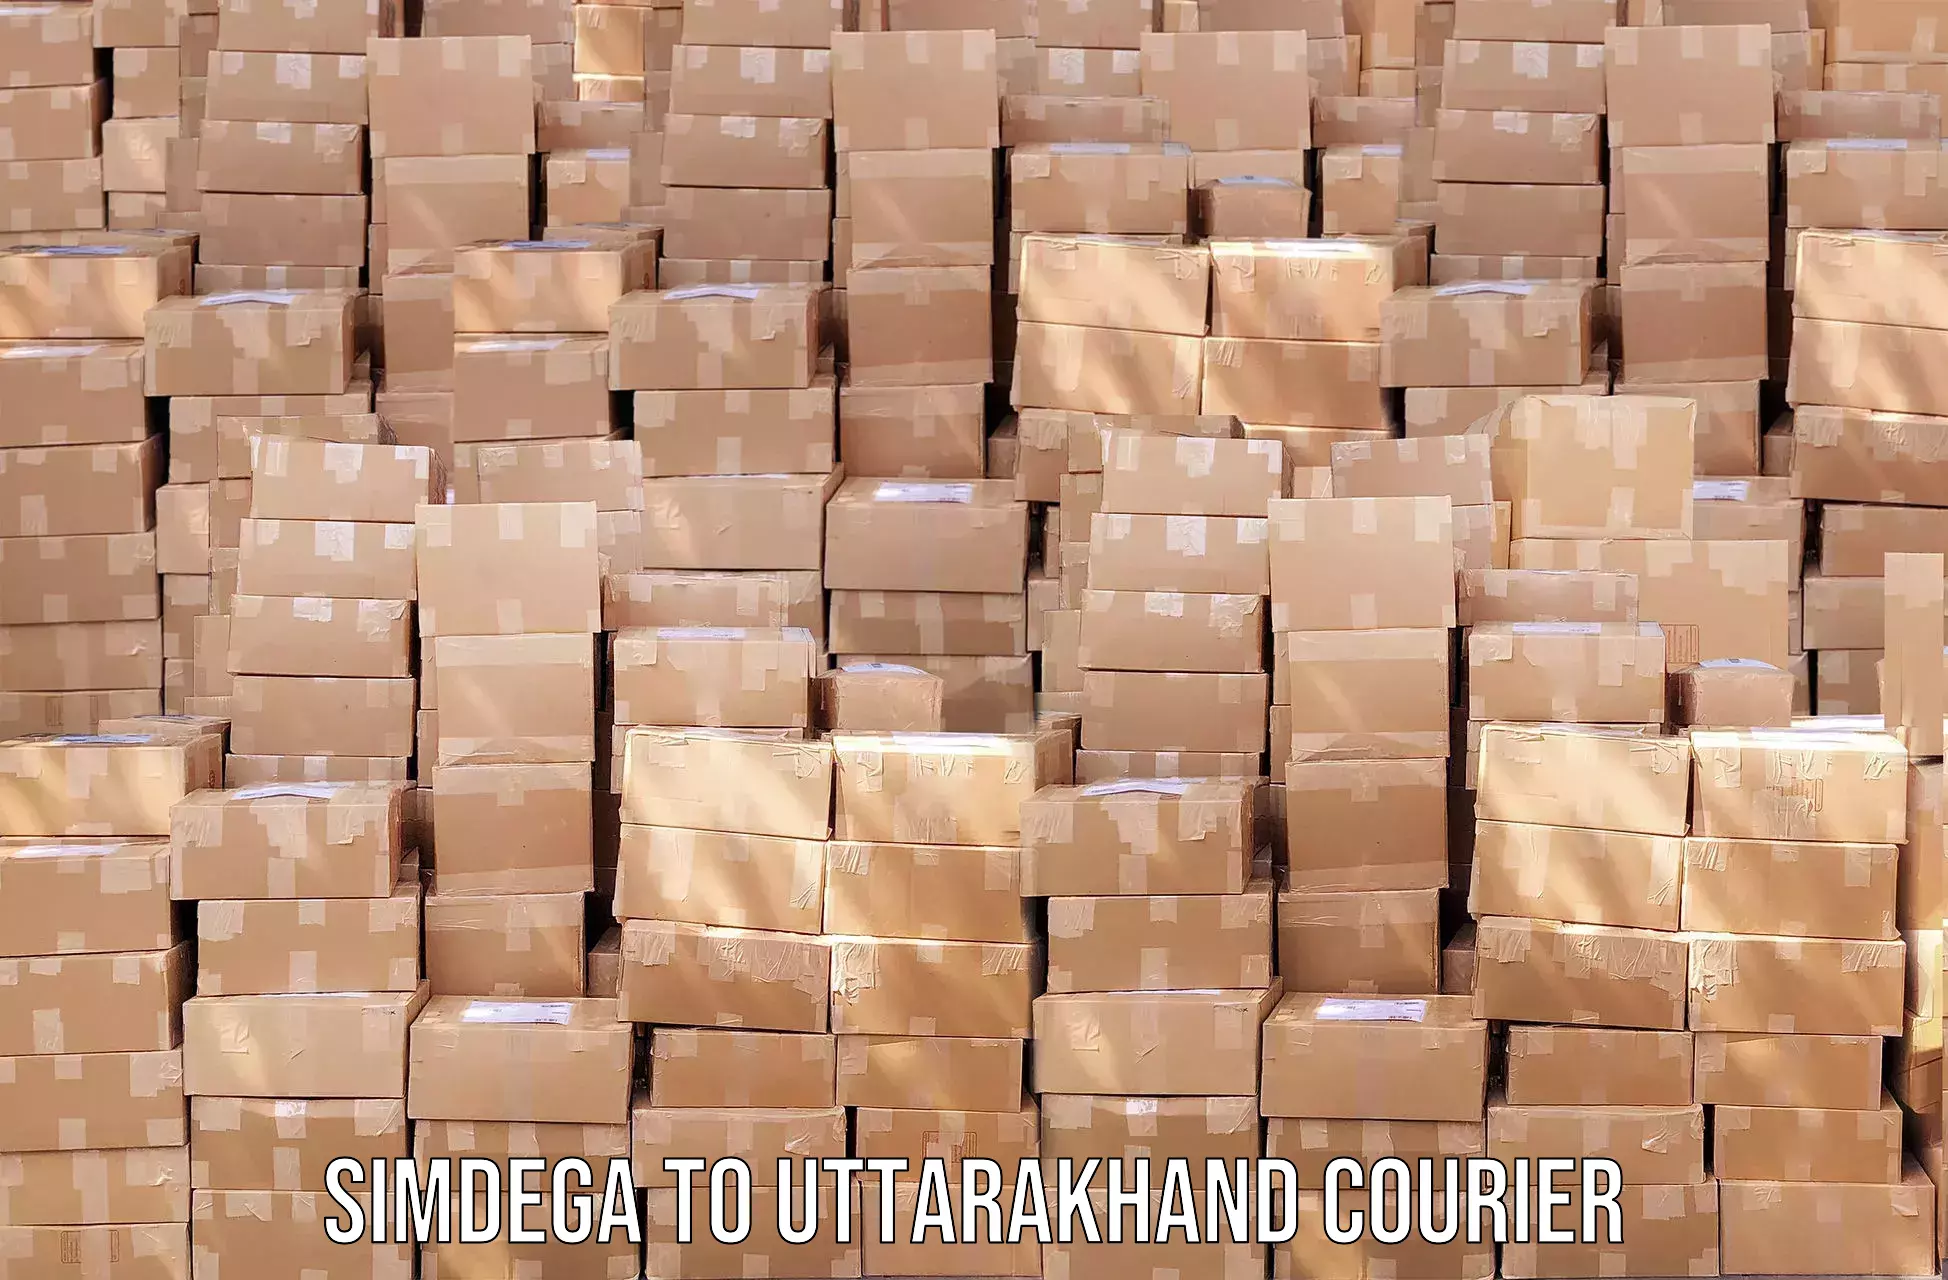 Courier service comparison Simdega to Paithani